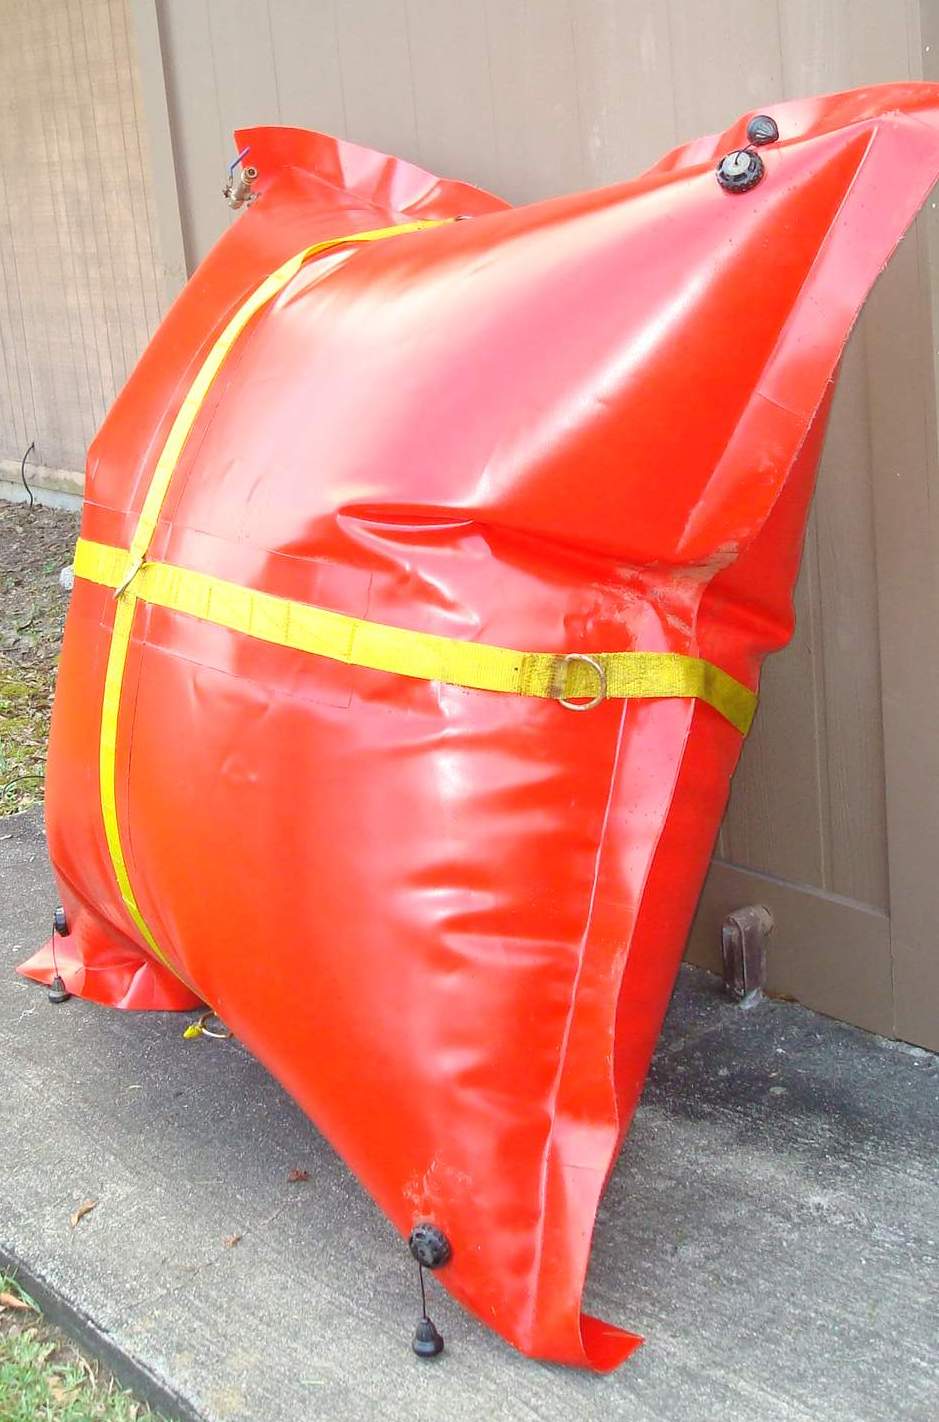 Marine Air bag salvage lift system